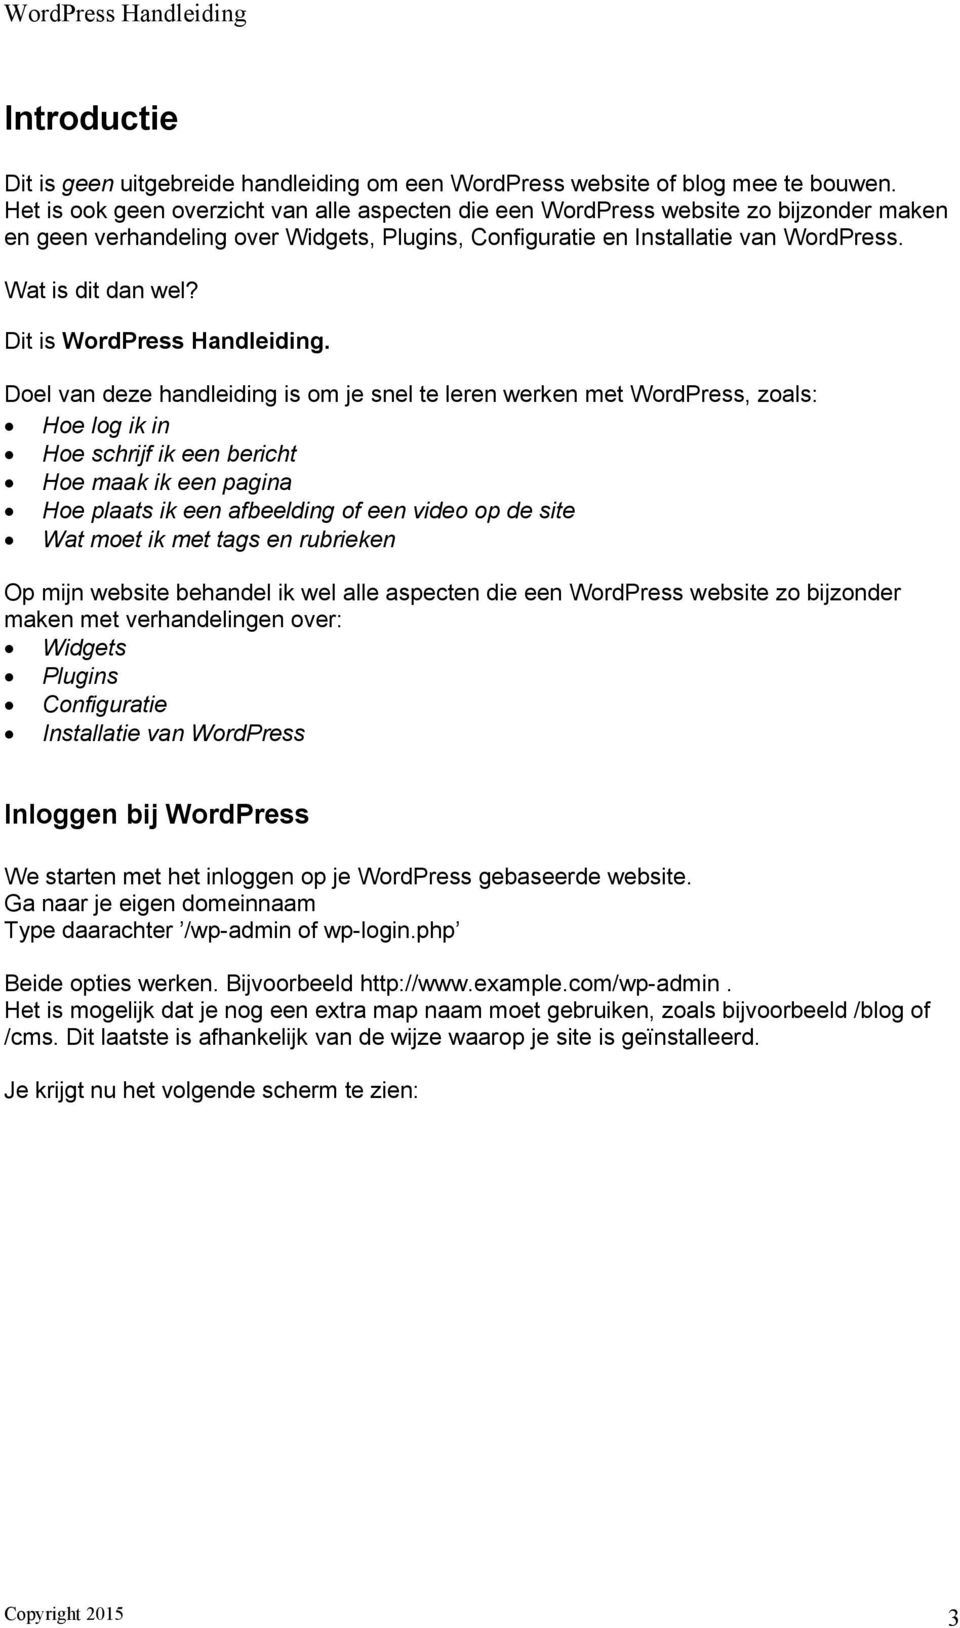 Dit is WordPress Handleiding.